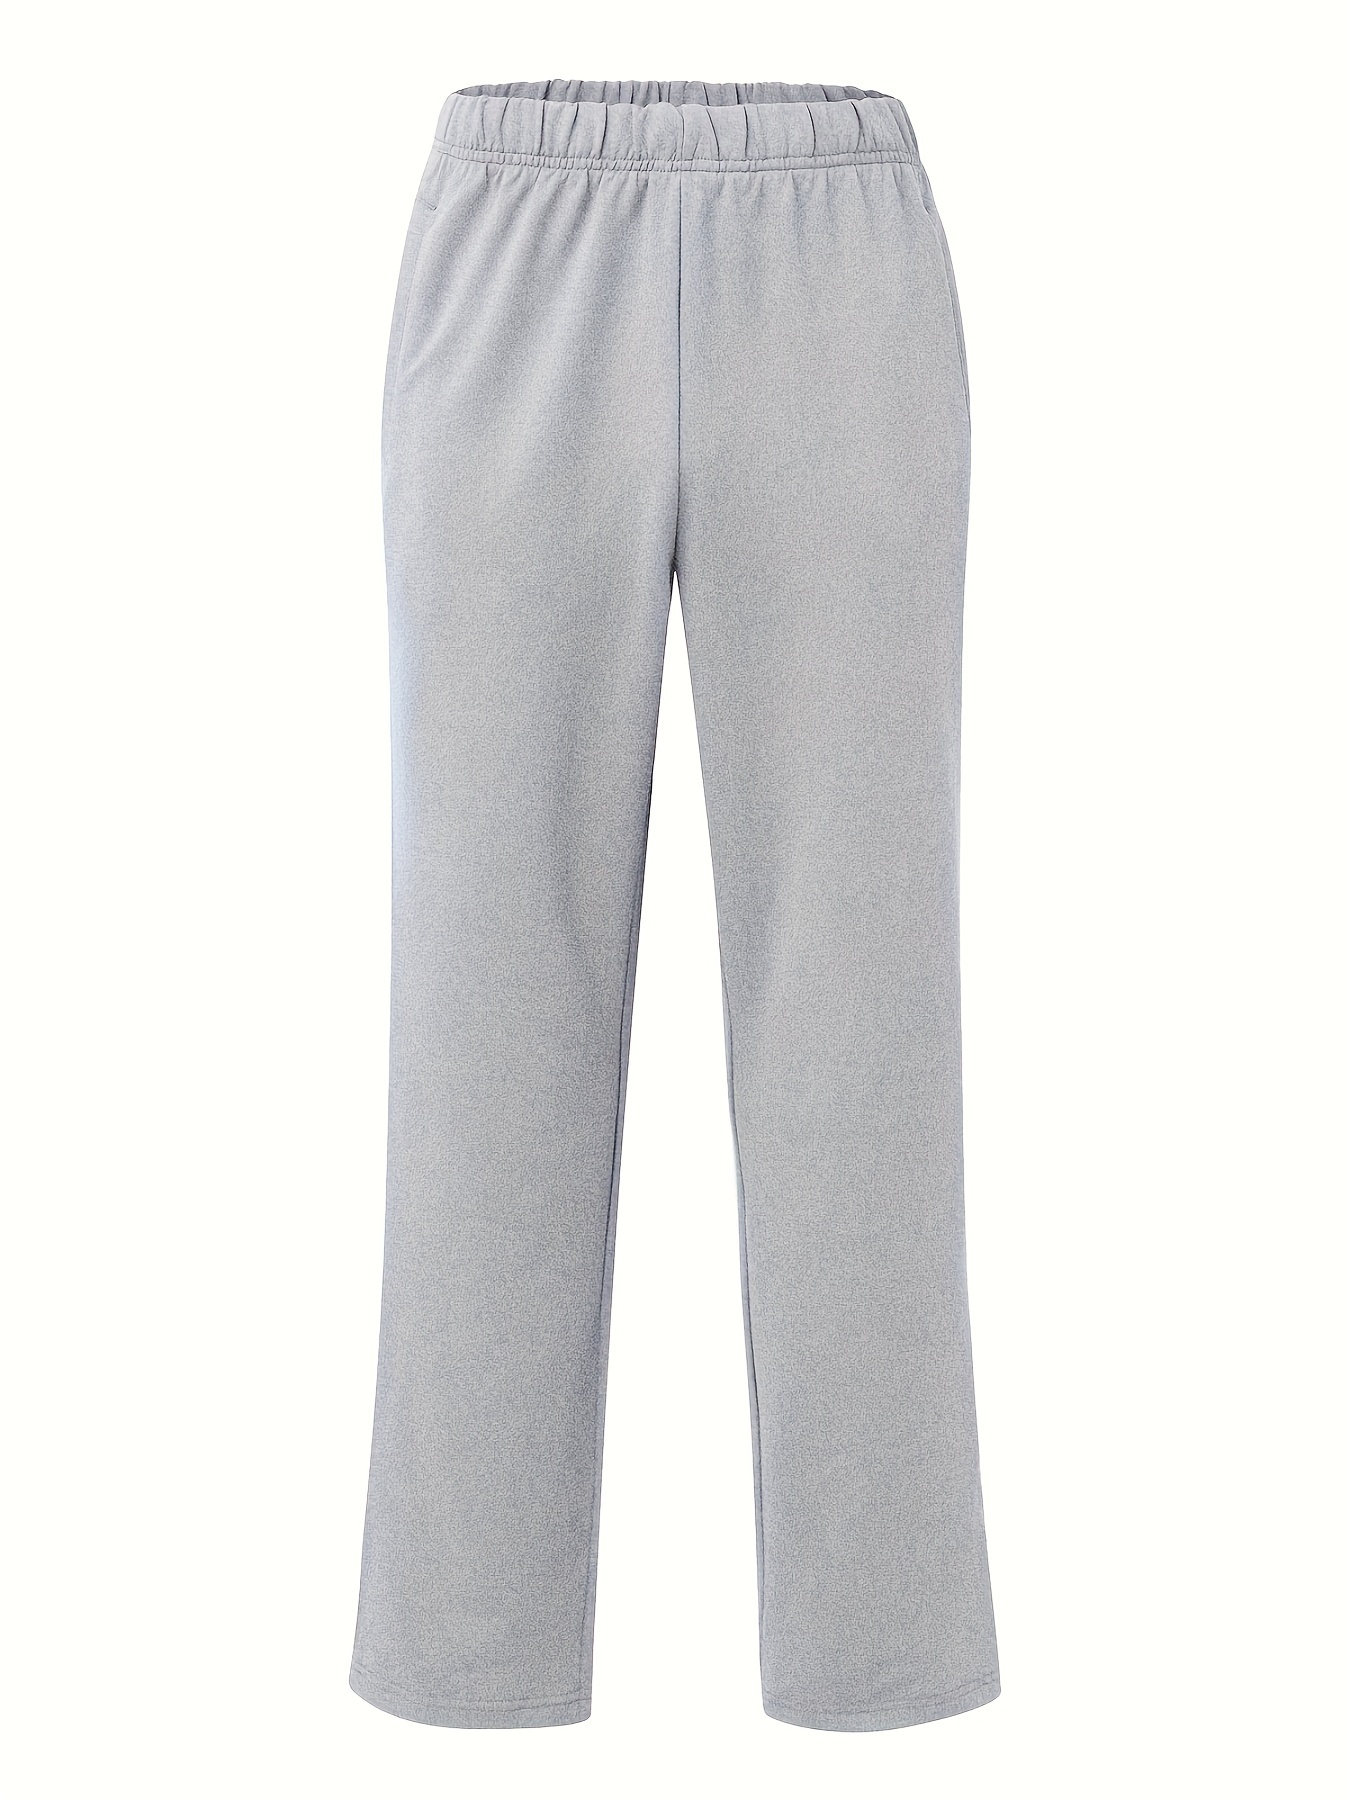 Grey Sweatpants Women's Long Pants Casual Pants Athletic Sports